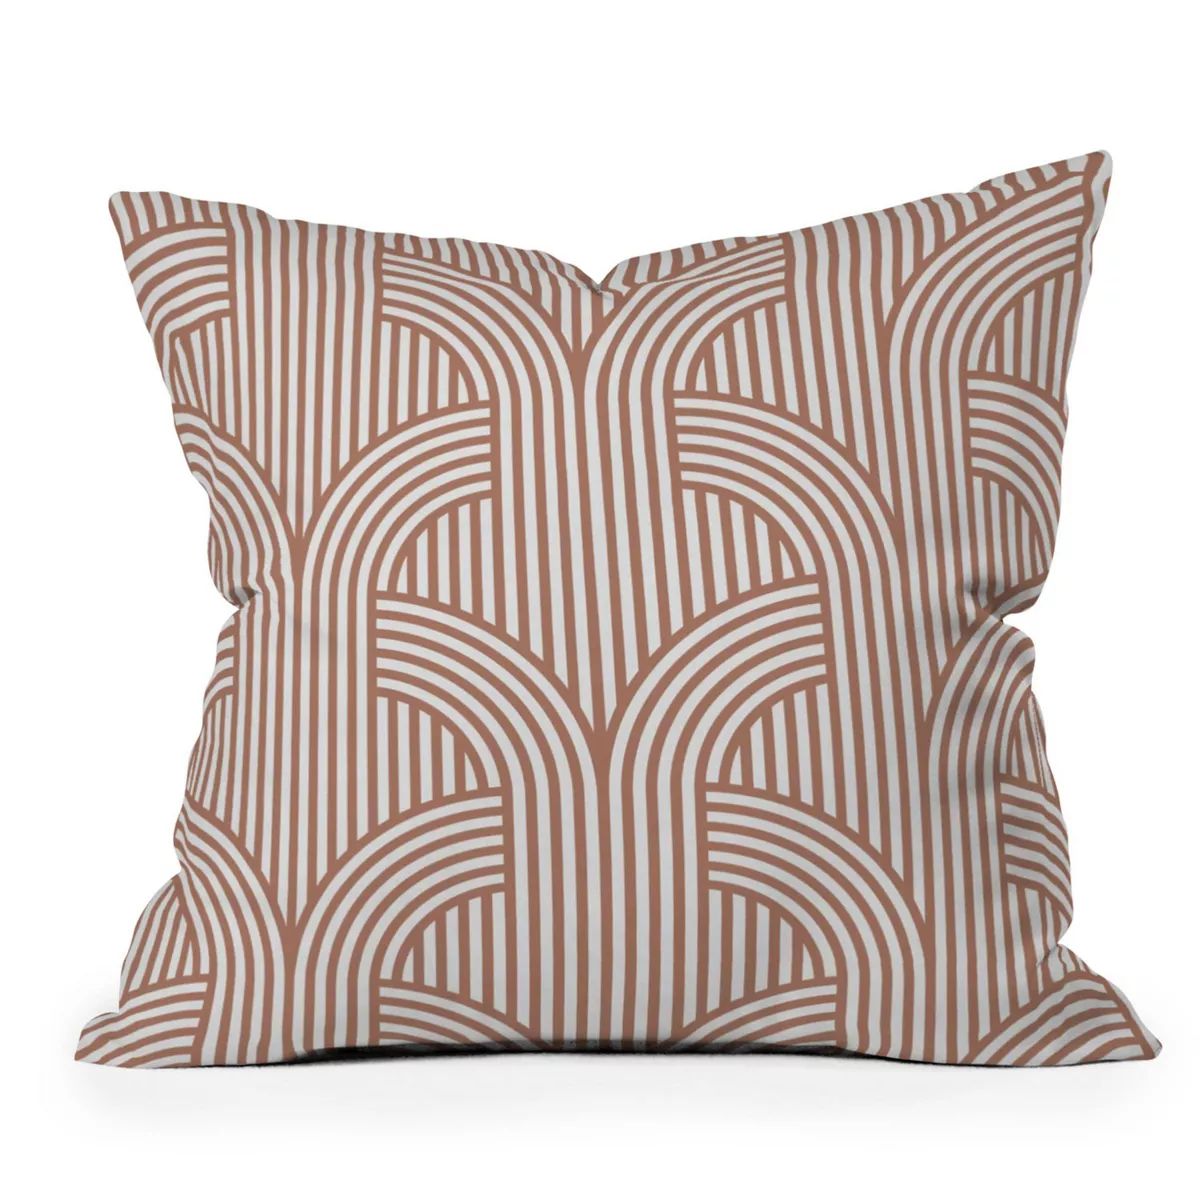 18"x18" Deny Designs Marta Barragan Camarasa Retro Lines Square Outdoor Throw Pillow Beige | Target